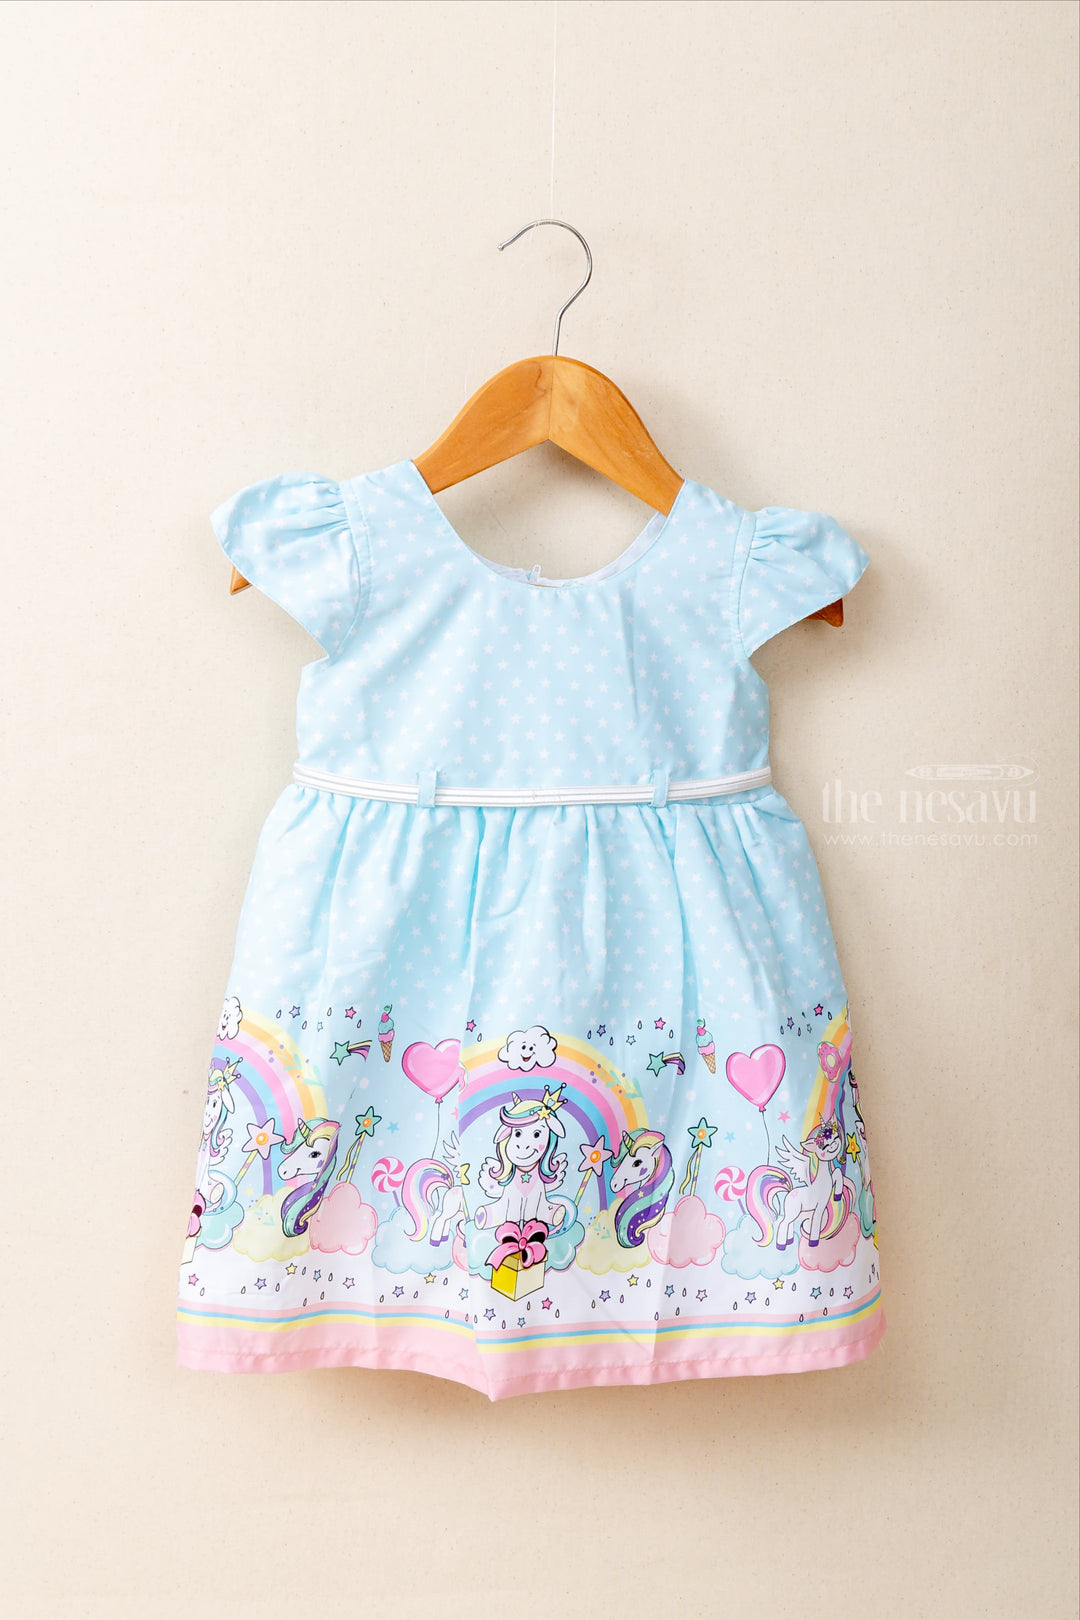 The Nesavu Baby Frock / Jhabla Skyblue Designer Cotton Casuals For Baby Girls With Flutter Sleeve psr silks Nesavu 14 (6M) / skyblue BFJ327C